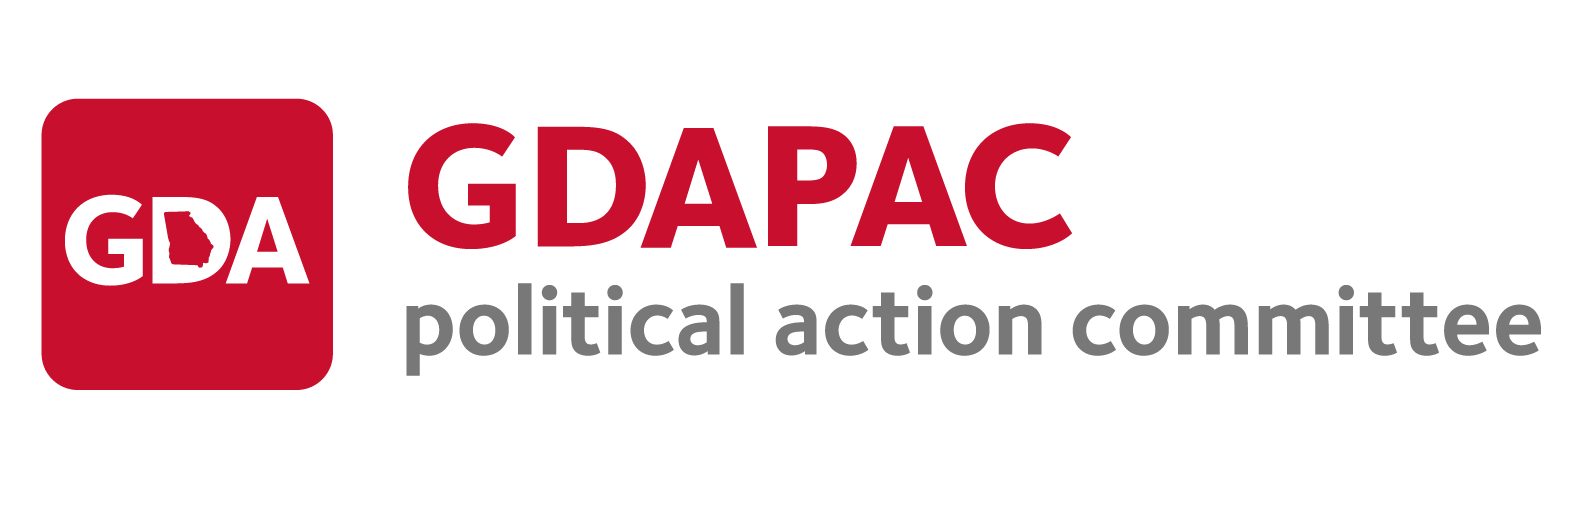 GDAPAC-Member/